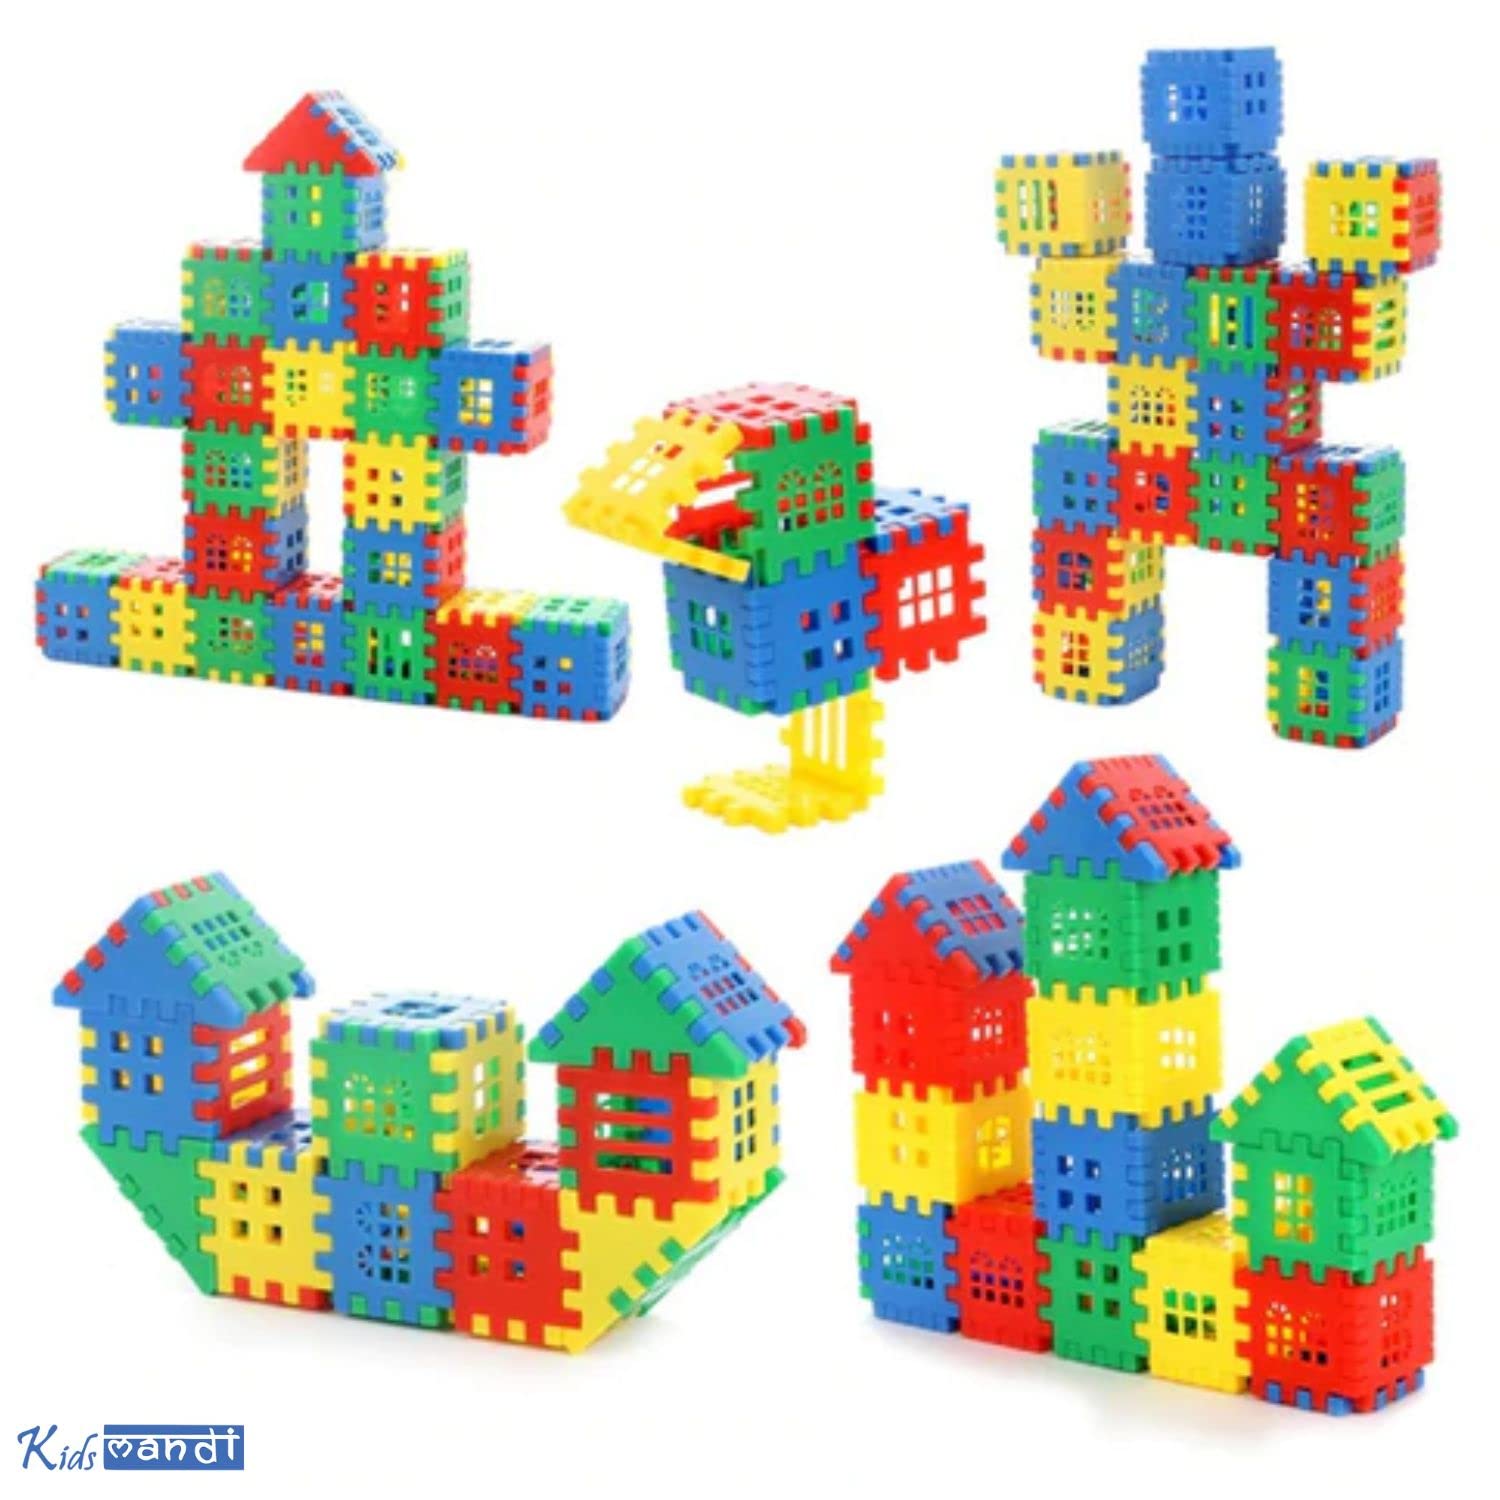 Kids Mandi Blocks Game Constructive Play - Educational Toy Set